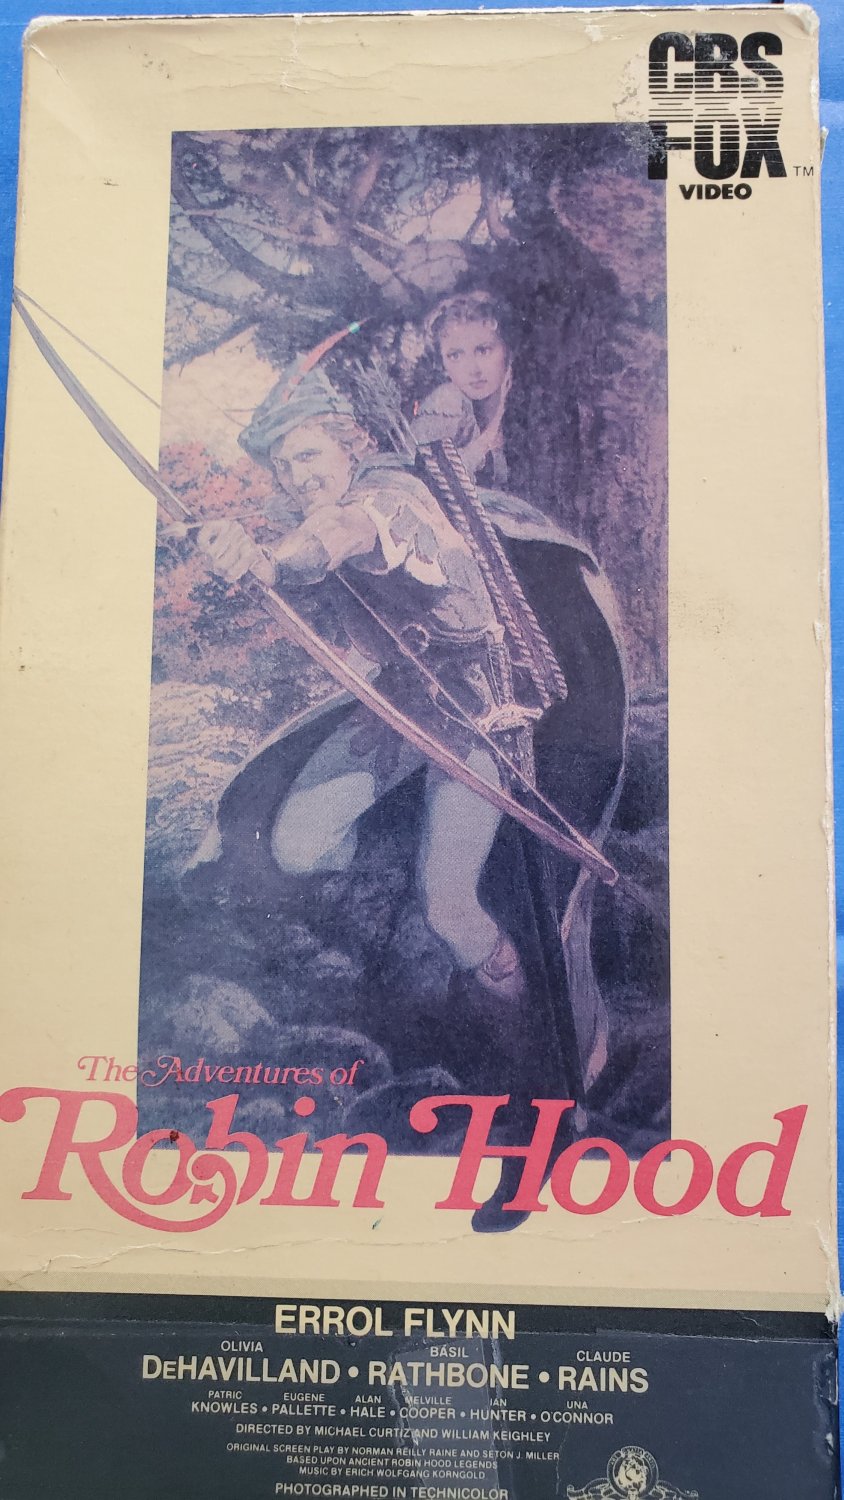 The Adventures of Robin Hood 1938 Color VHS Tape Errol Flynn Olivia DeHavilland Basil Rathbone